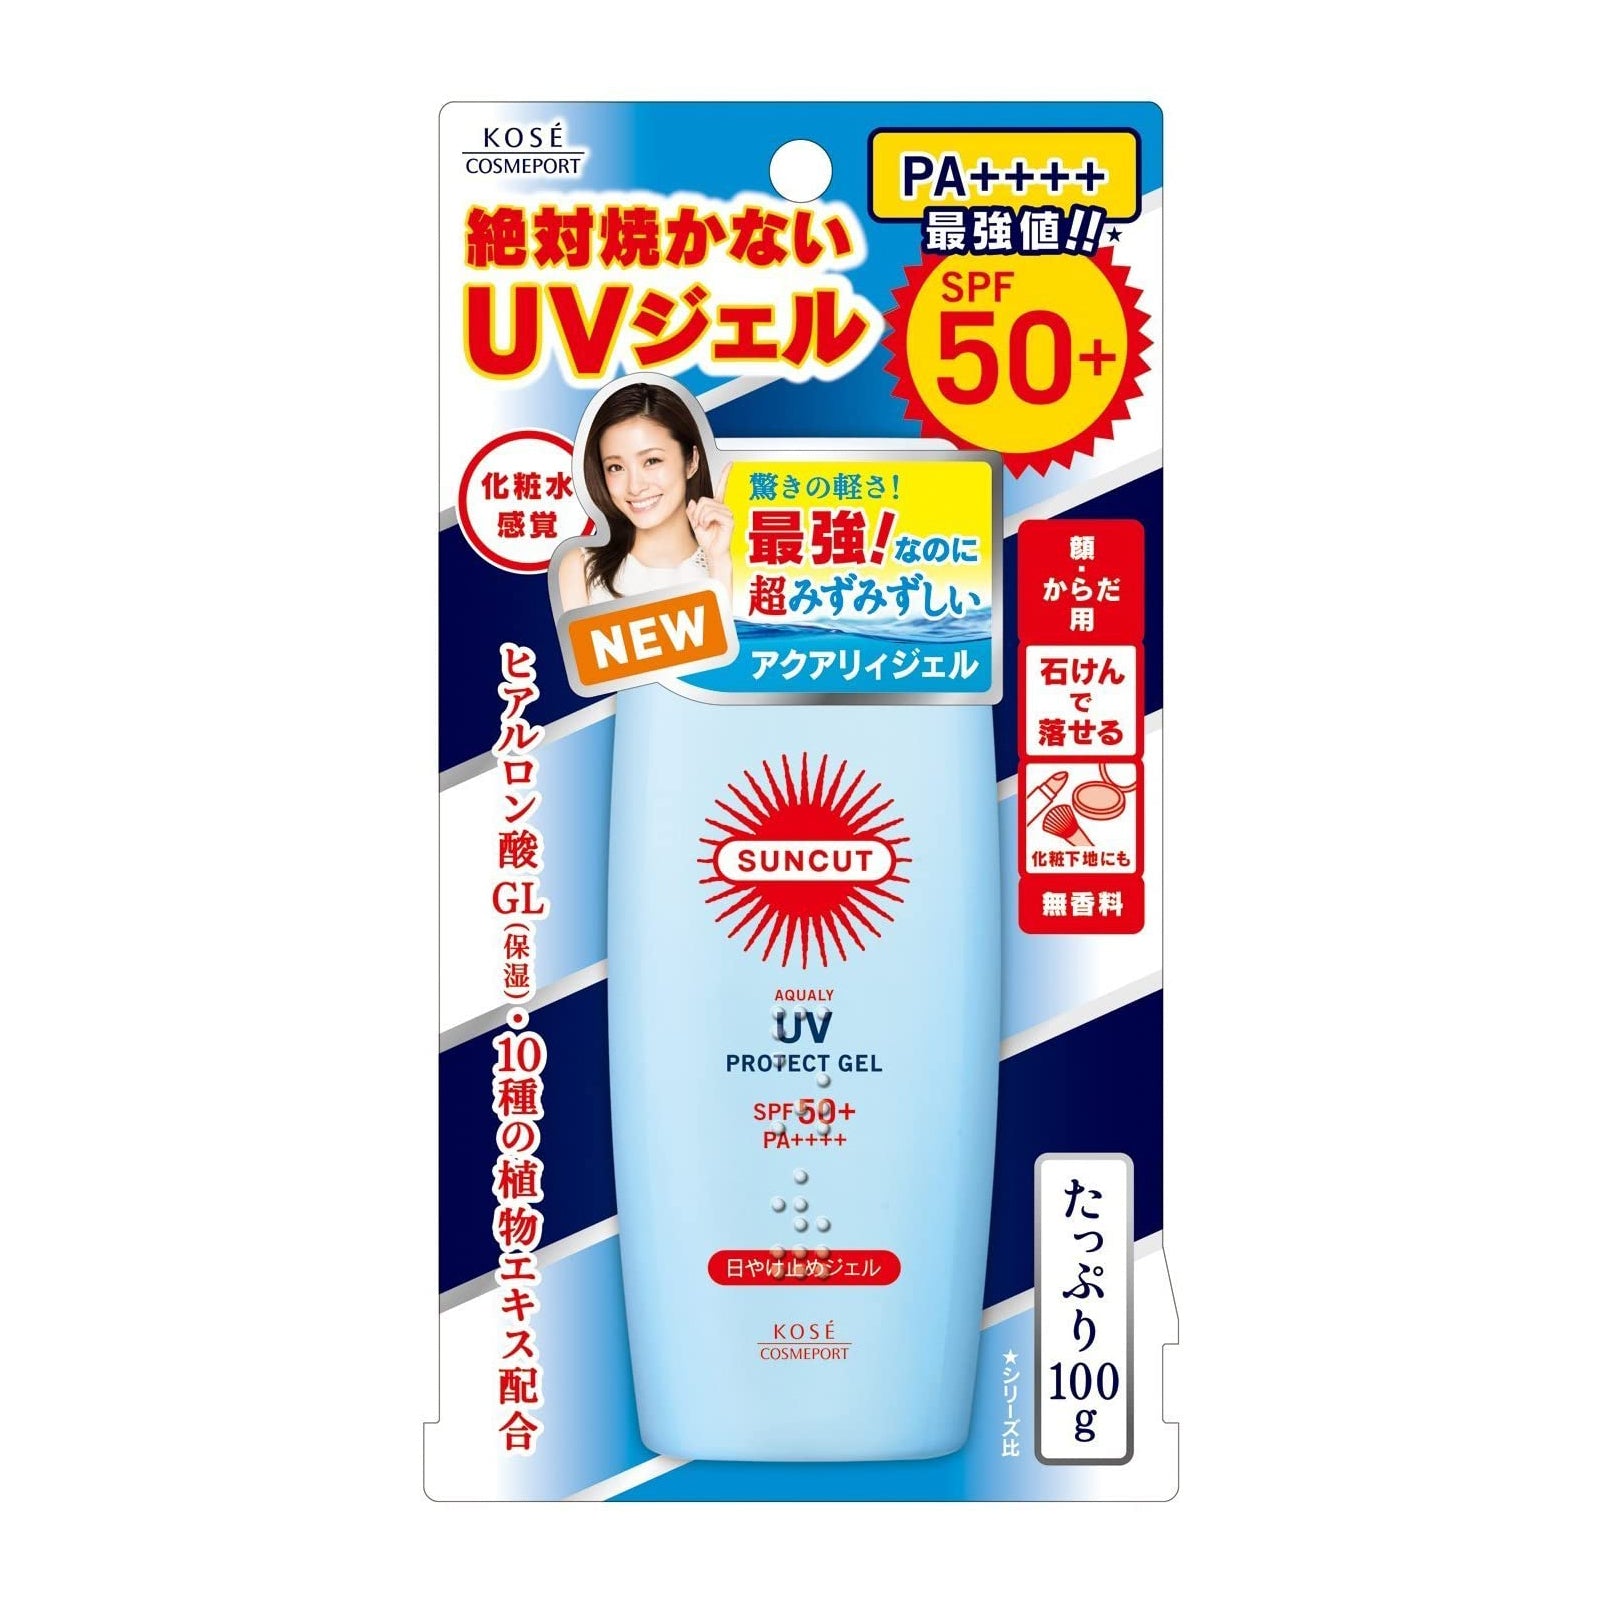 Kose Cosmeport Suncut UV Protect Gel SPF 50+ PA++++ Beauty Kose   